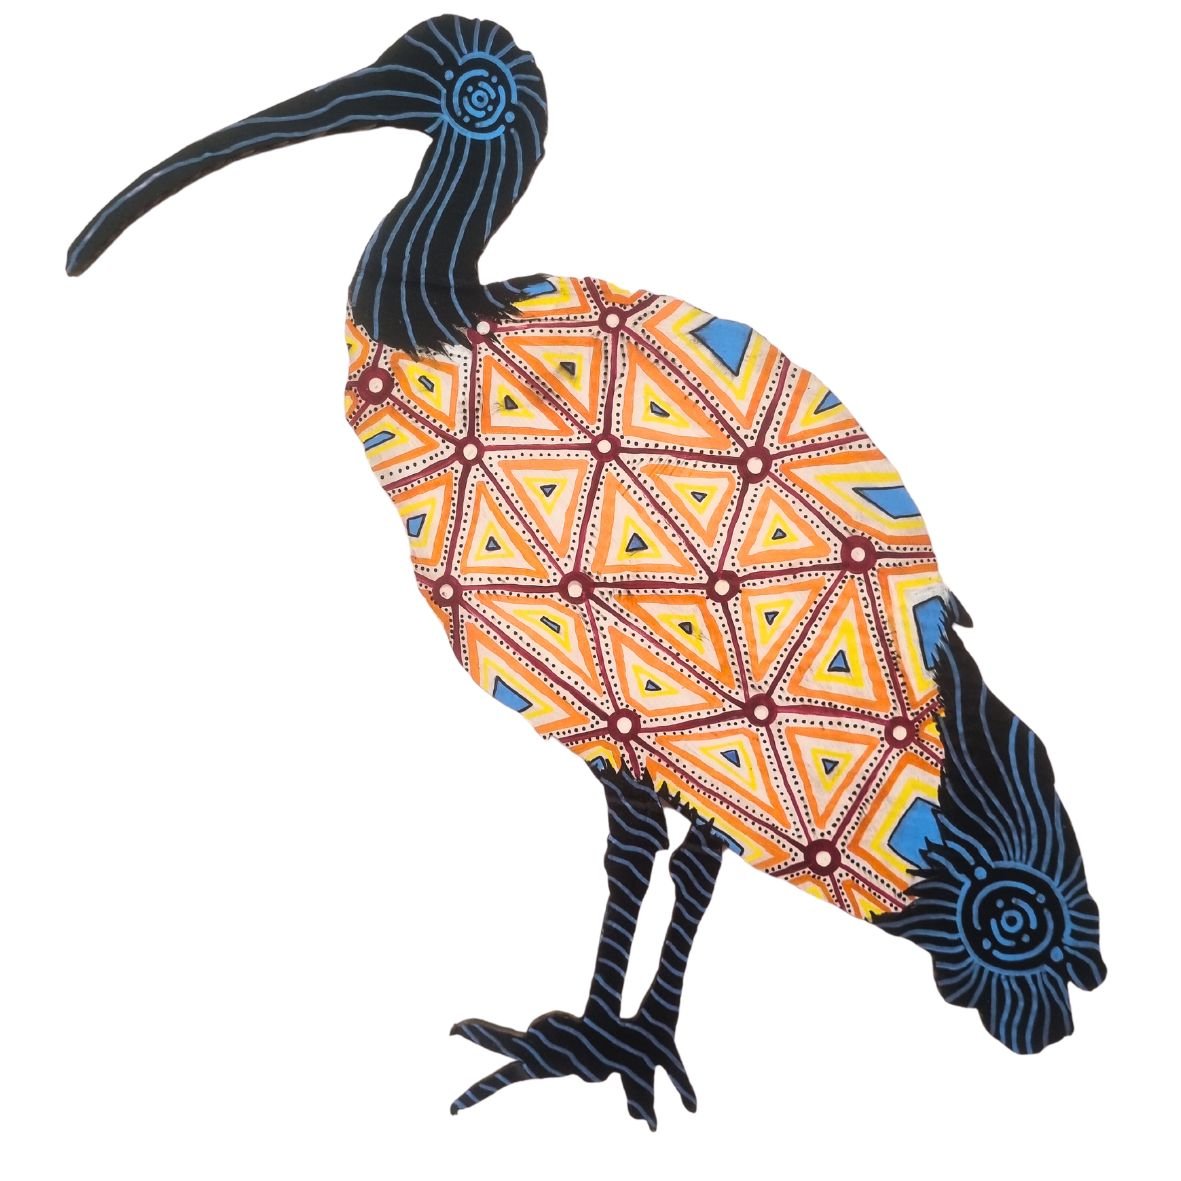 Yuwagayrr – ibis, Acrylic Paint and Posca pens on cardboard 